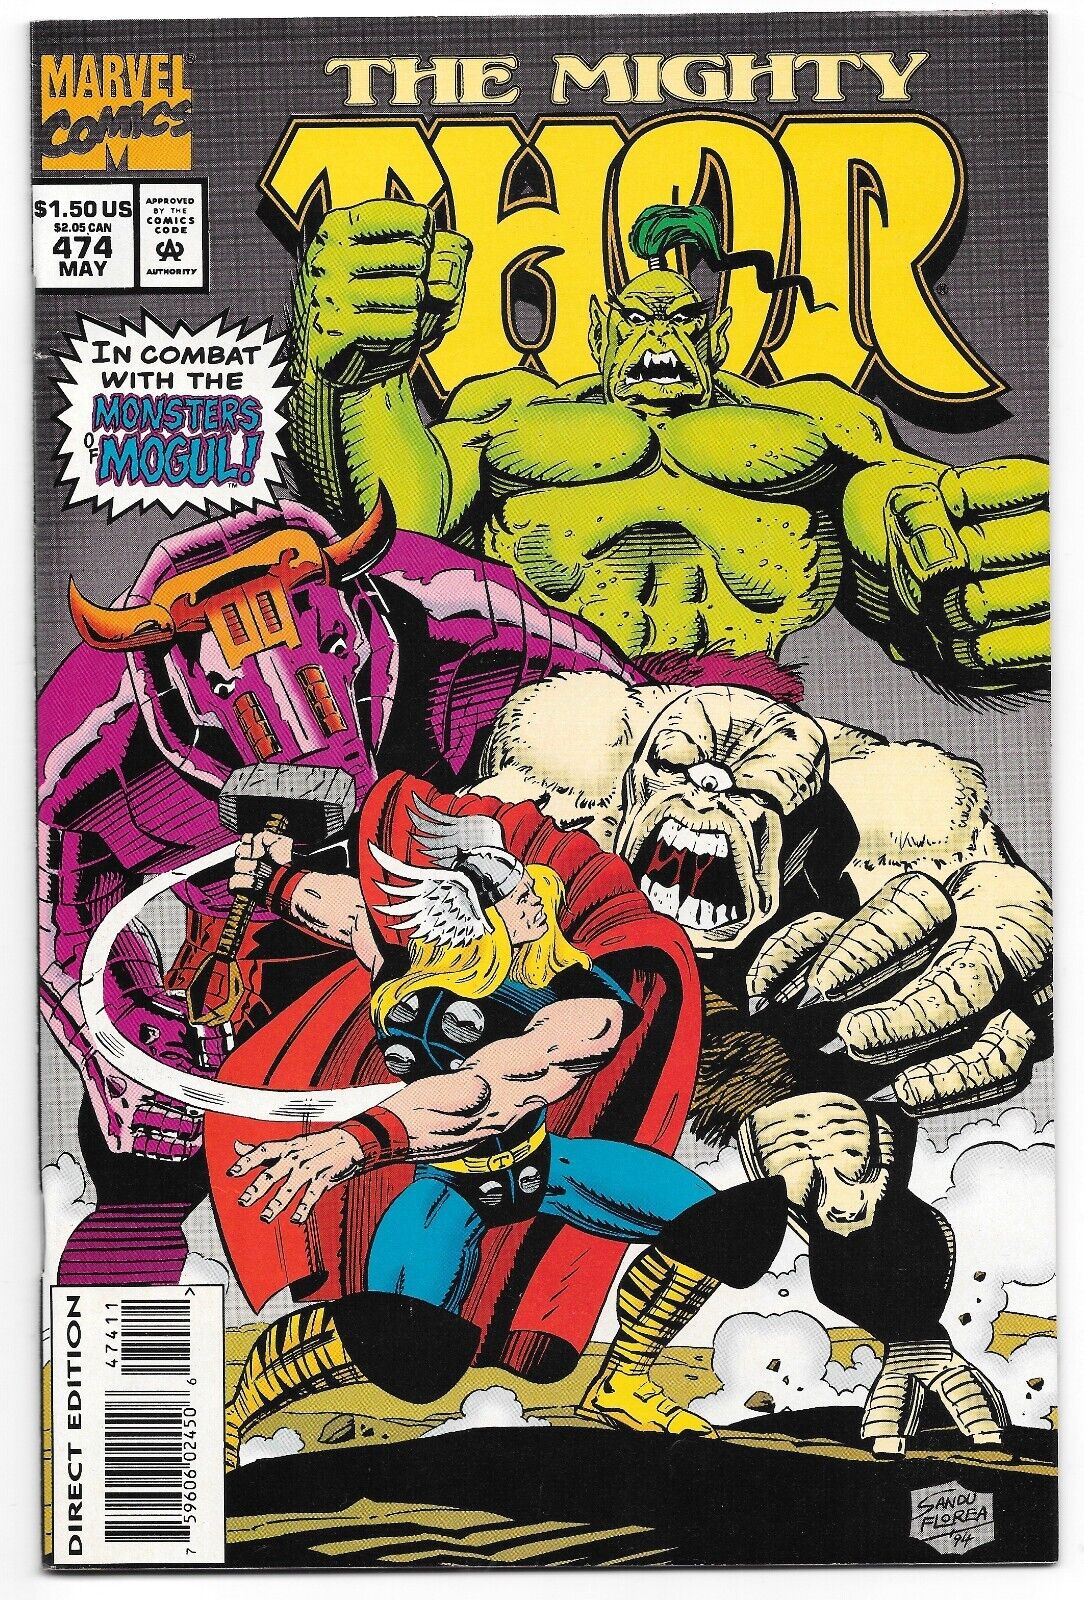 Mighty Thor #474 (05/1994) Marvel Comics